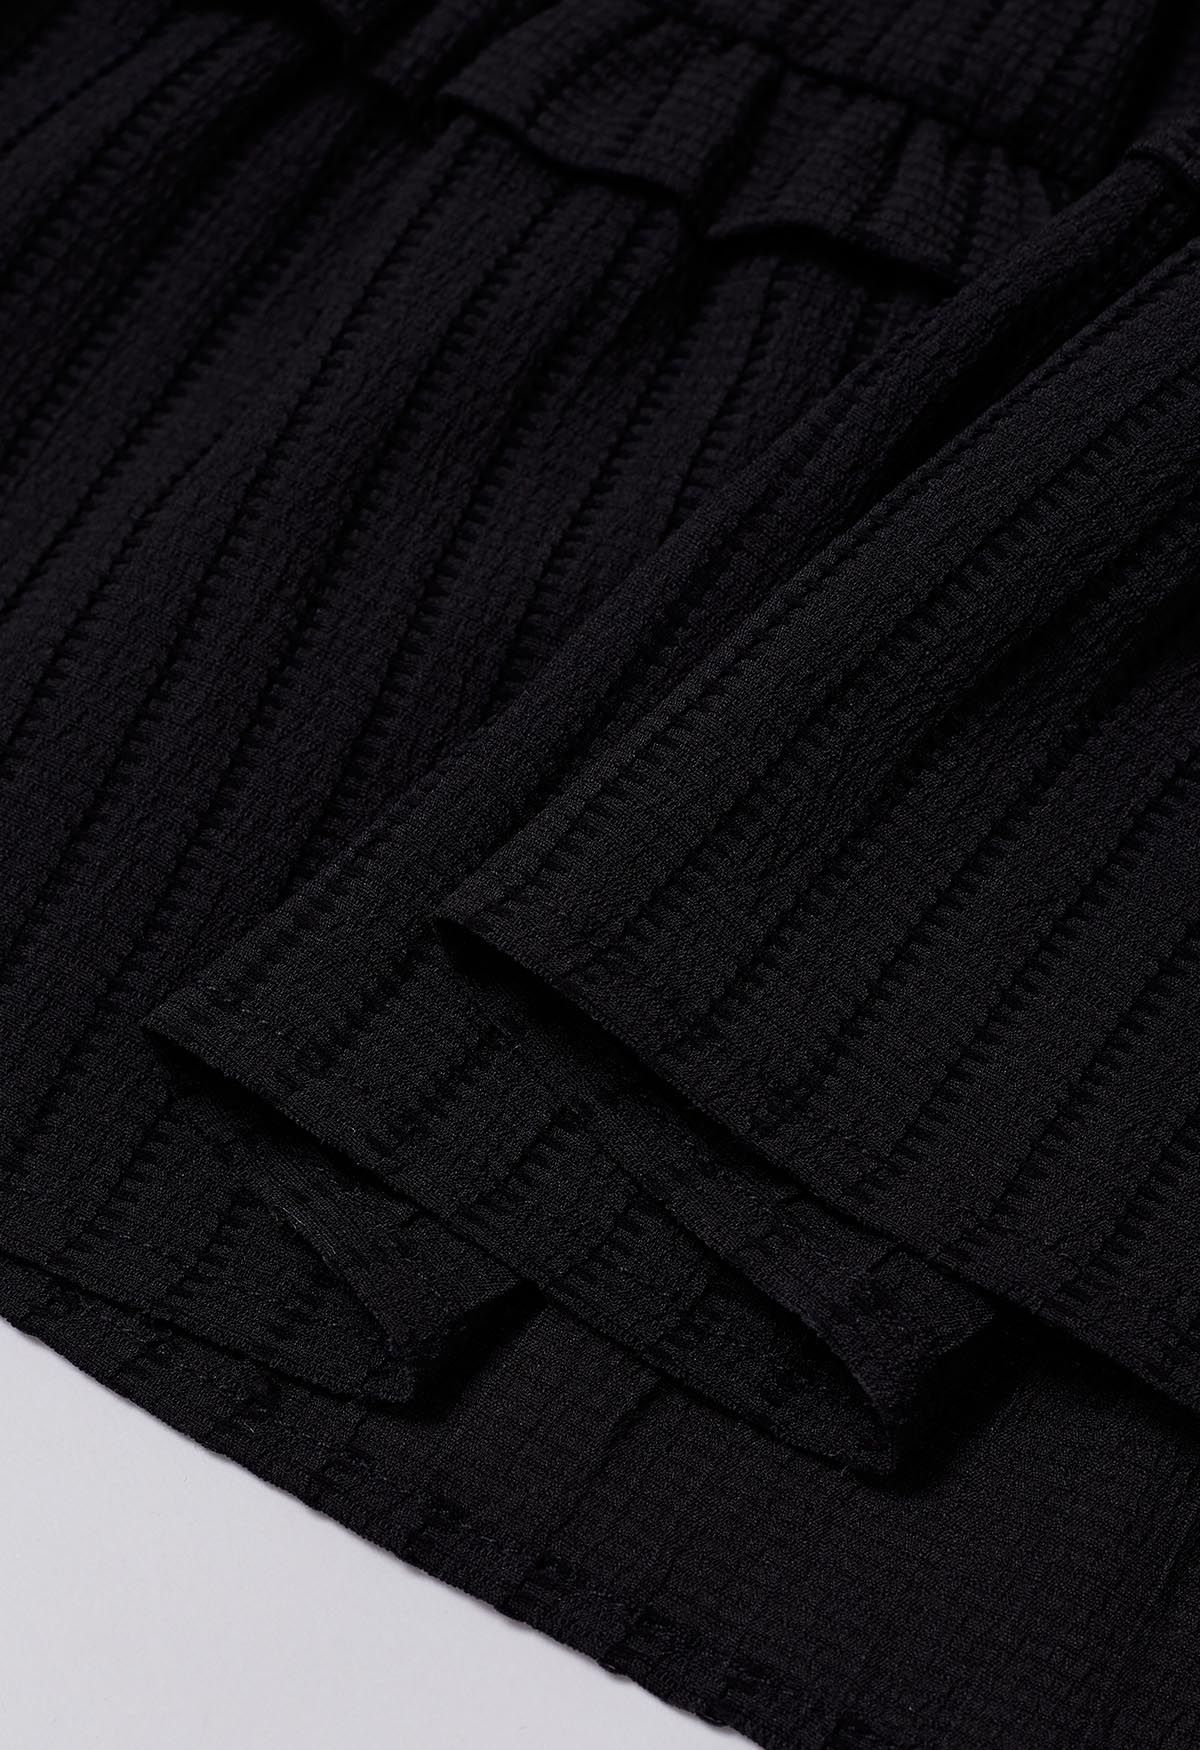 Ruffle Tiered Stripe Texture Maxi Skirt in Black